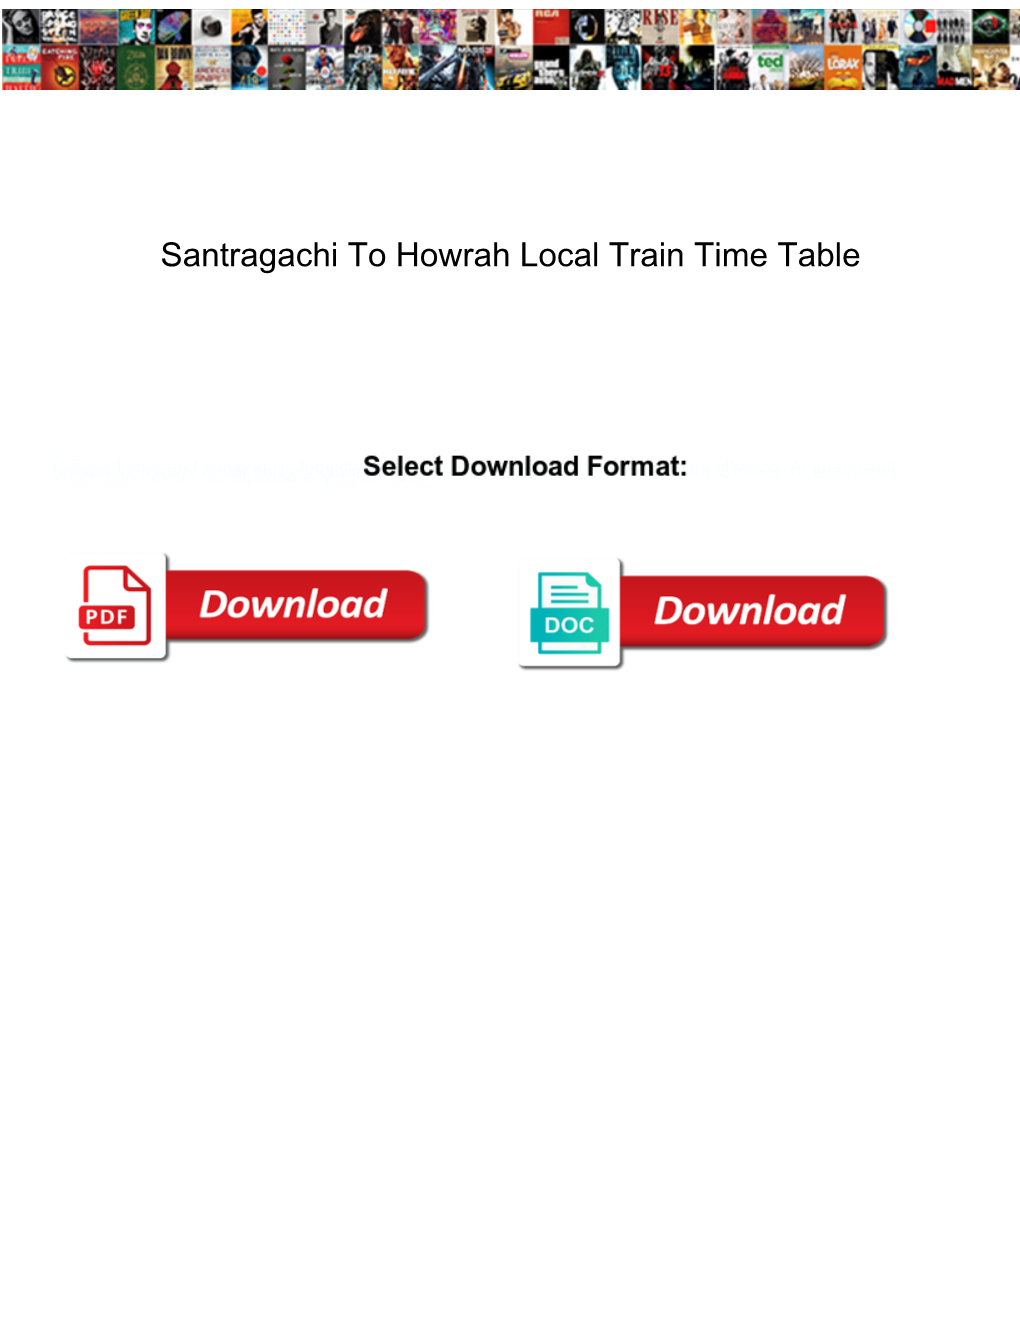 Santragachi to Howrah Local Train Time Table